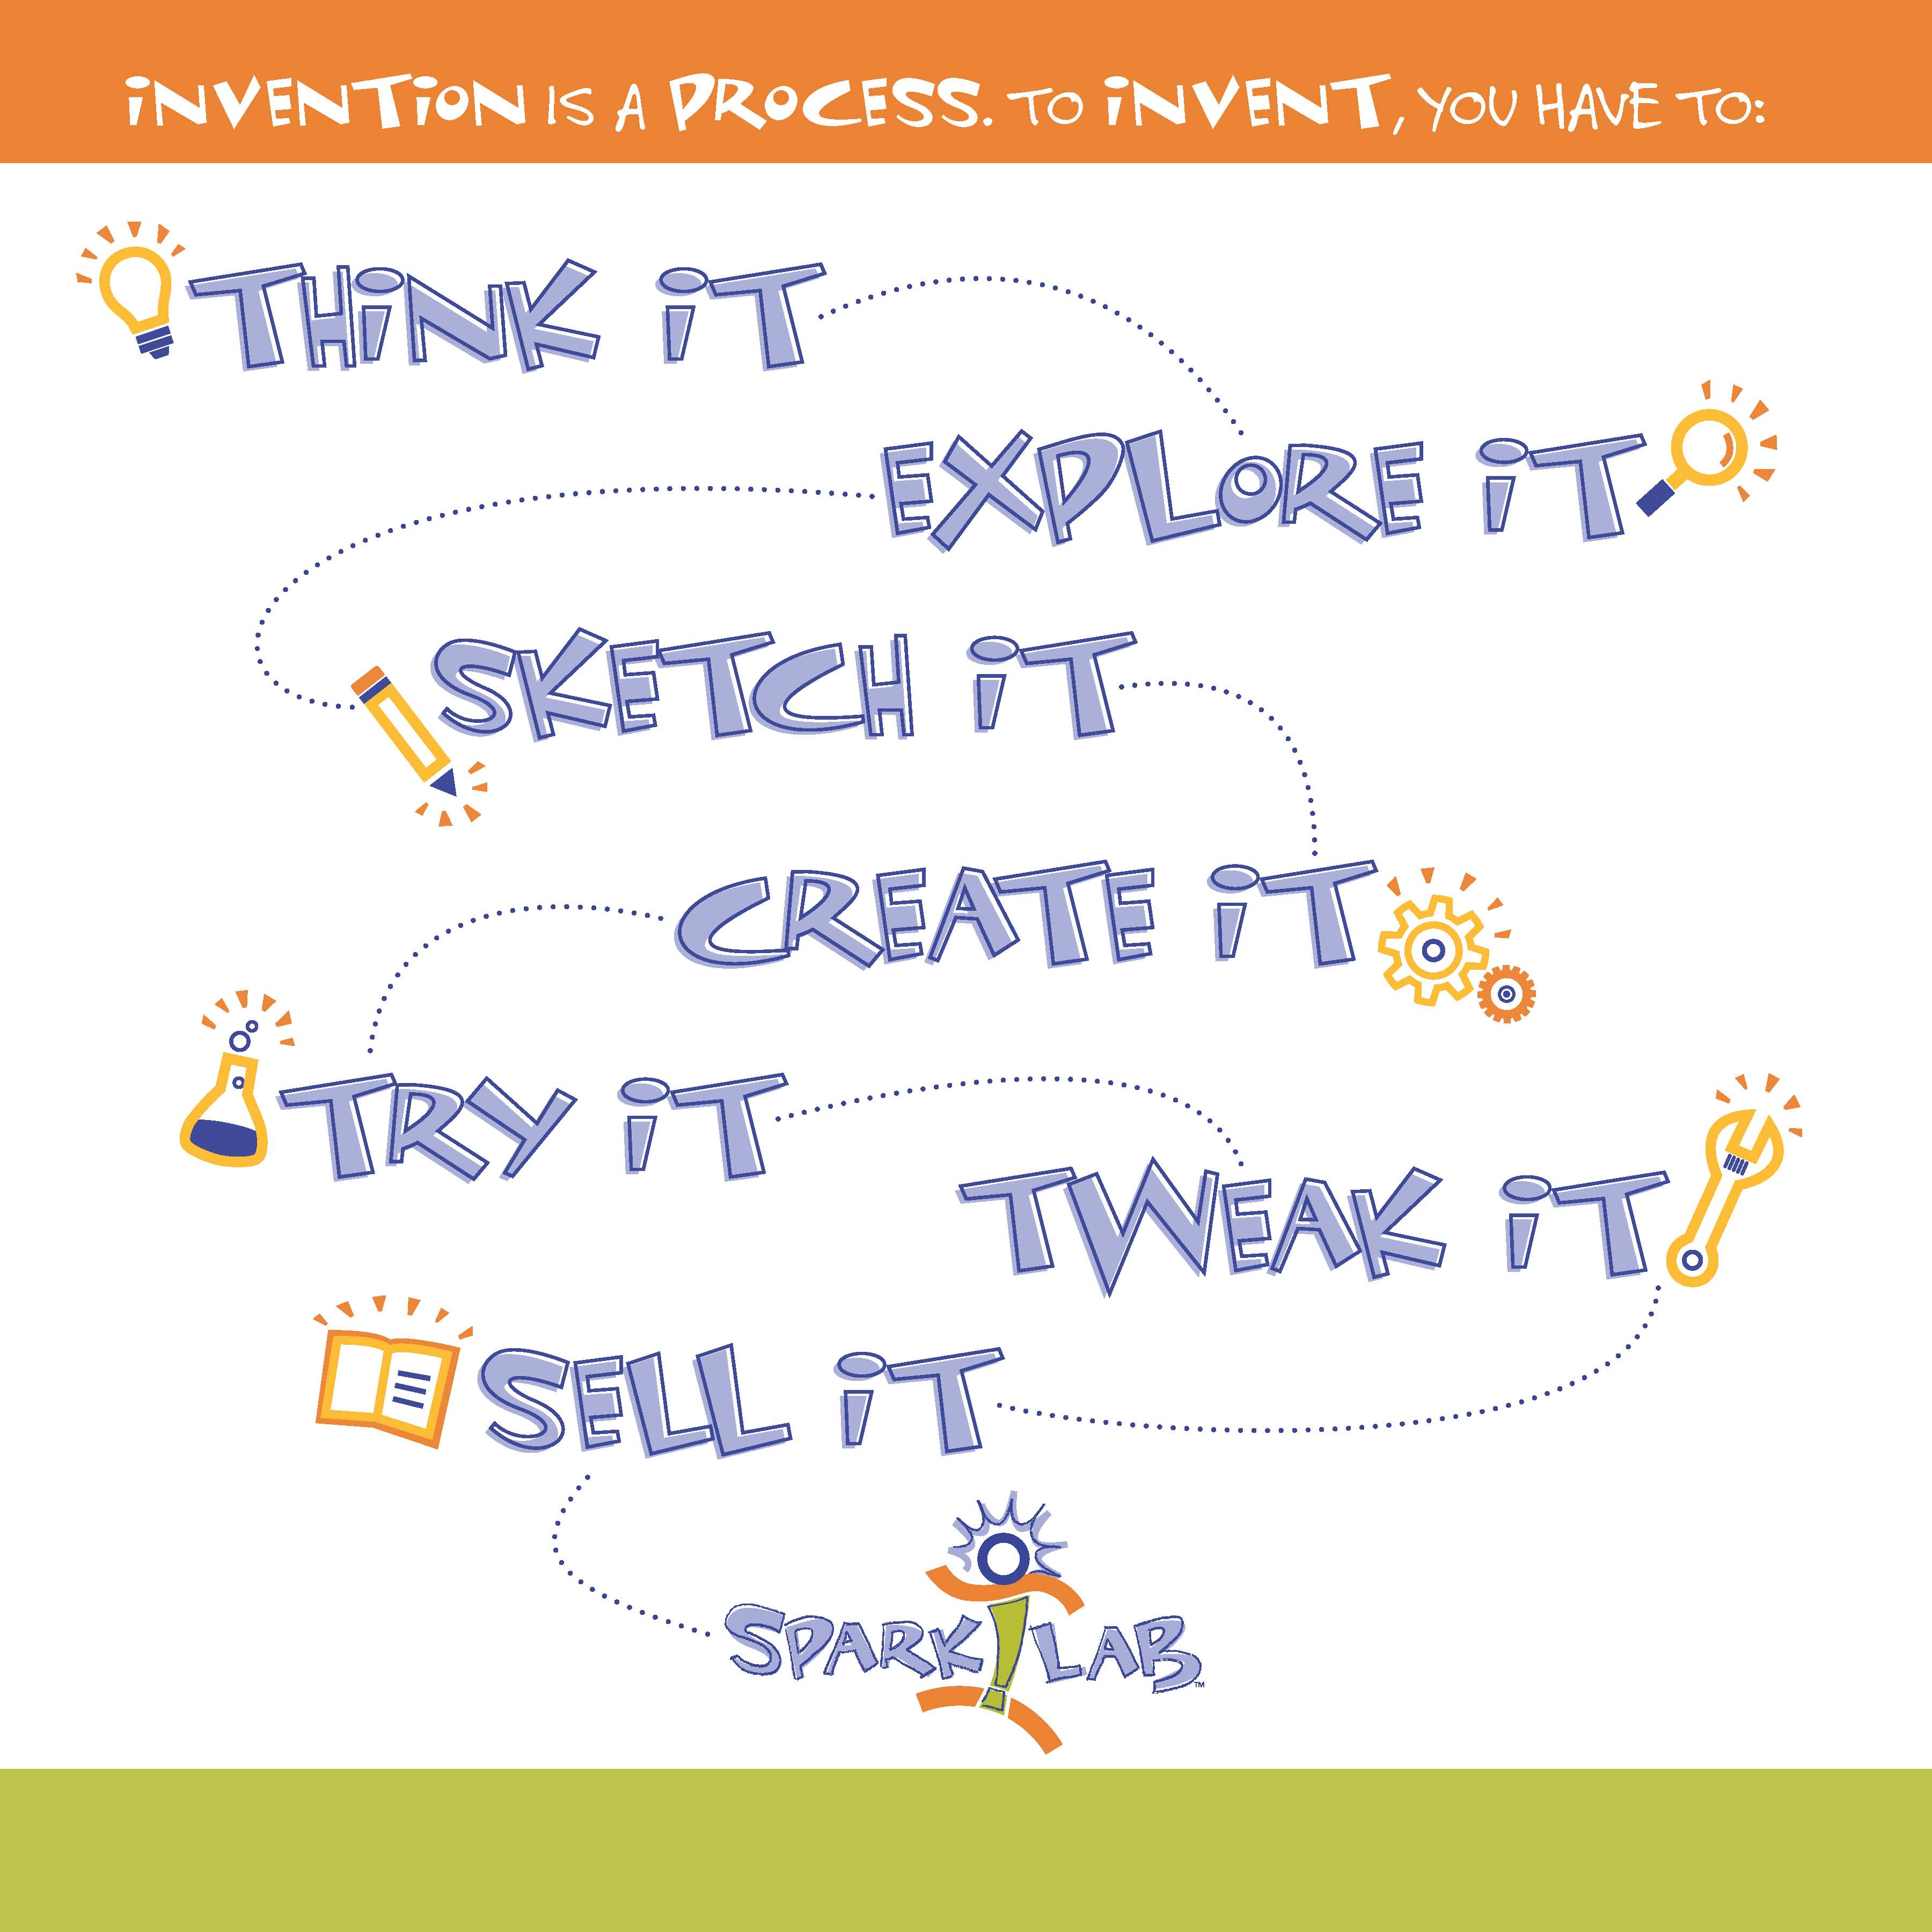 The Invention Process broken down into seven "it" phrases.